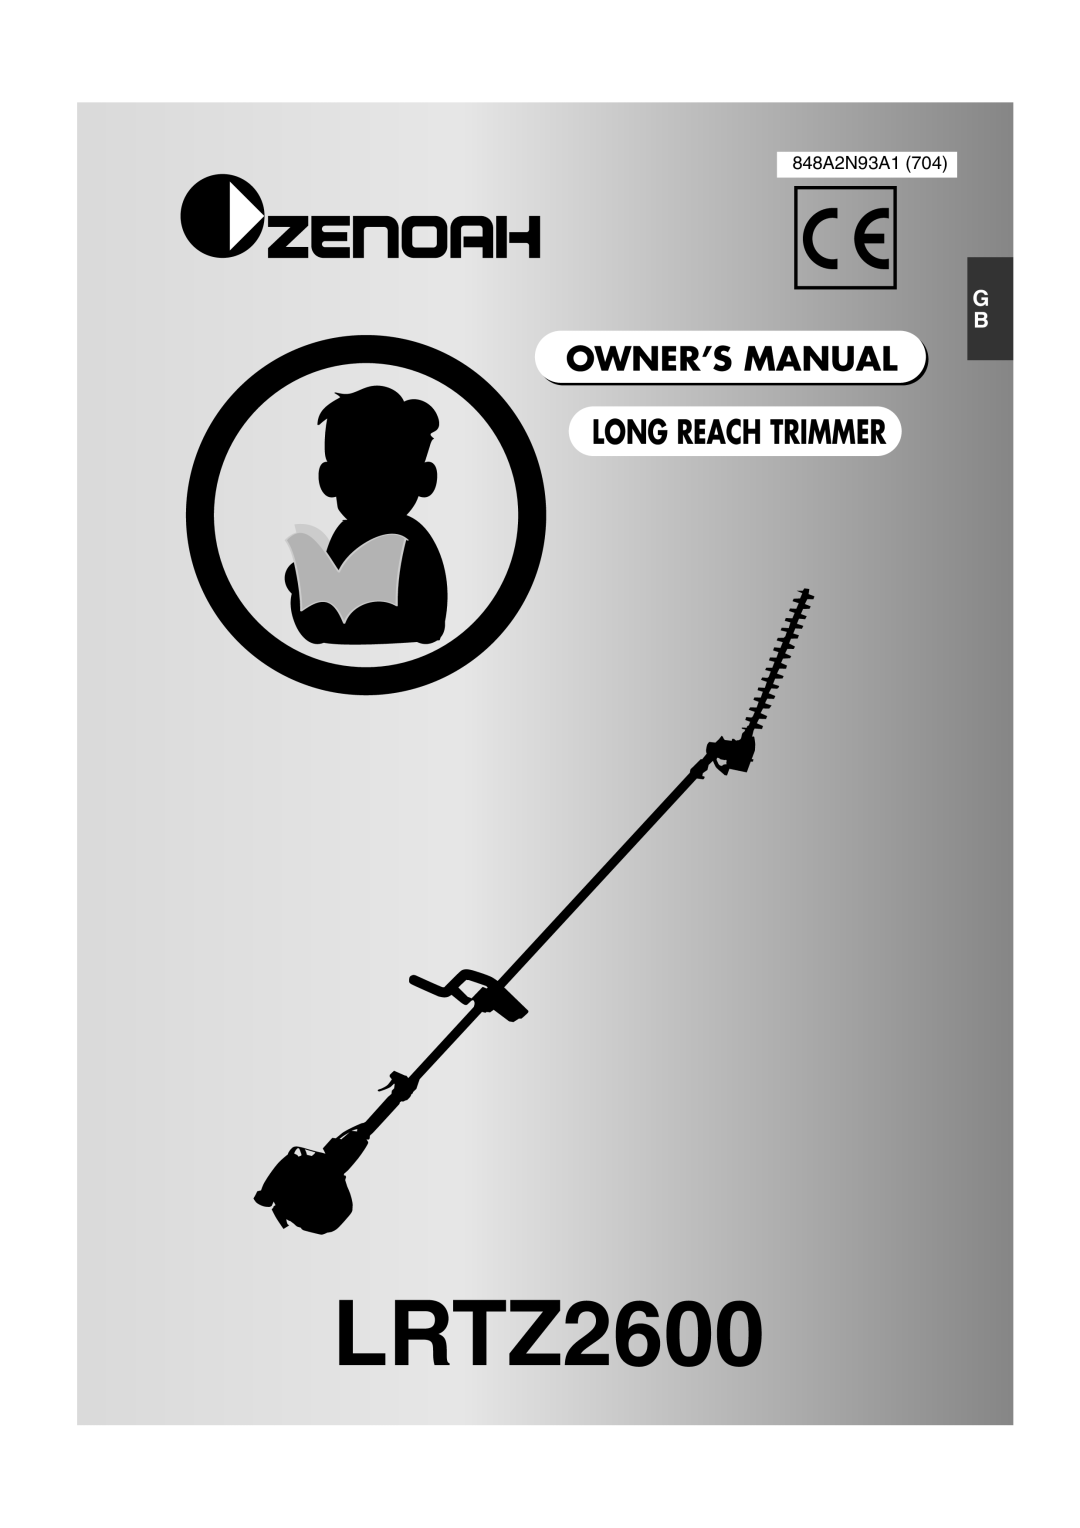 Zenoah LRTZ2600 owner manual Long Reach Trimmer, 848A2N93A1 